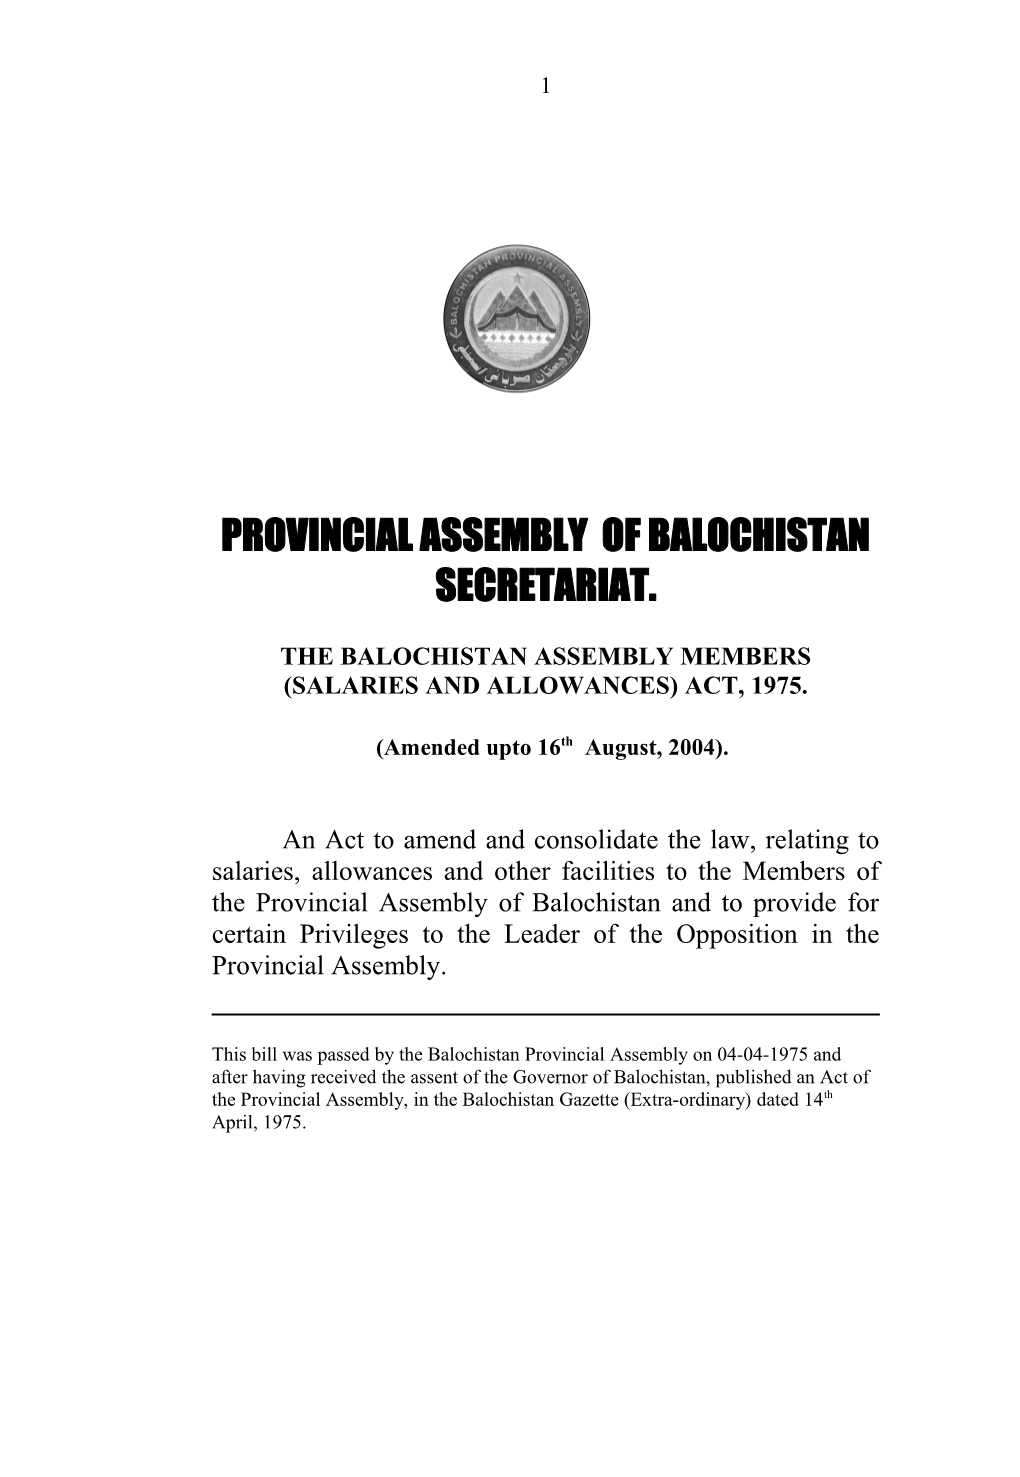 Balochistan Provincial Assembly Secretariat